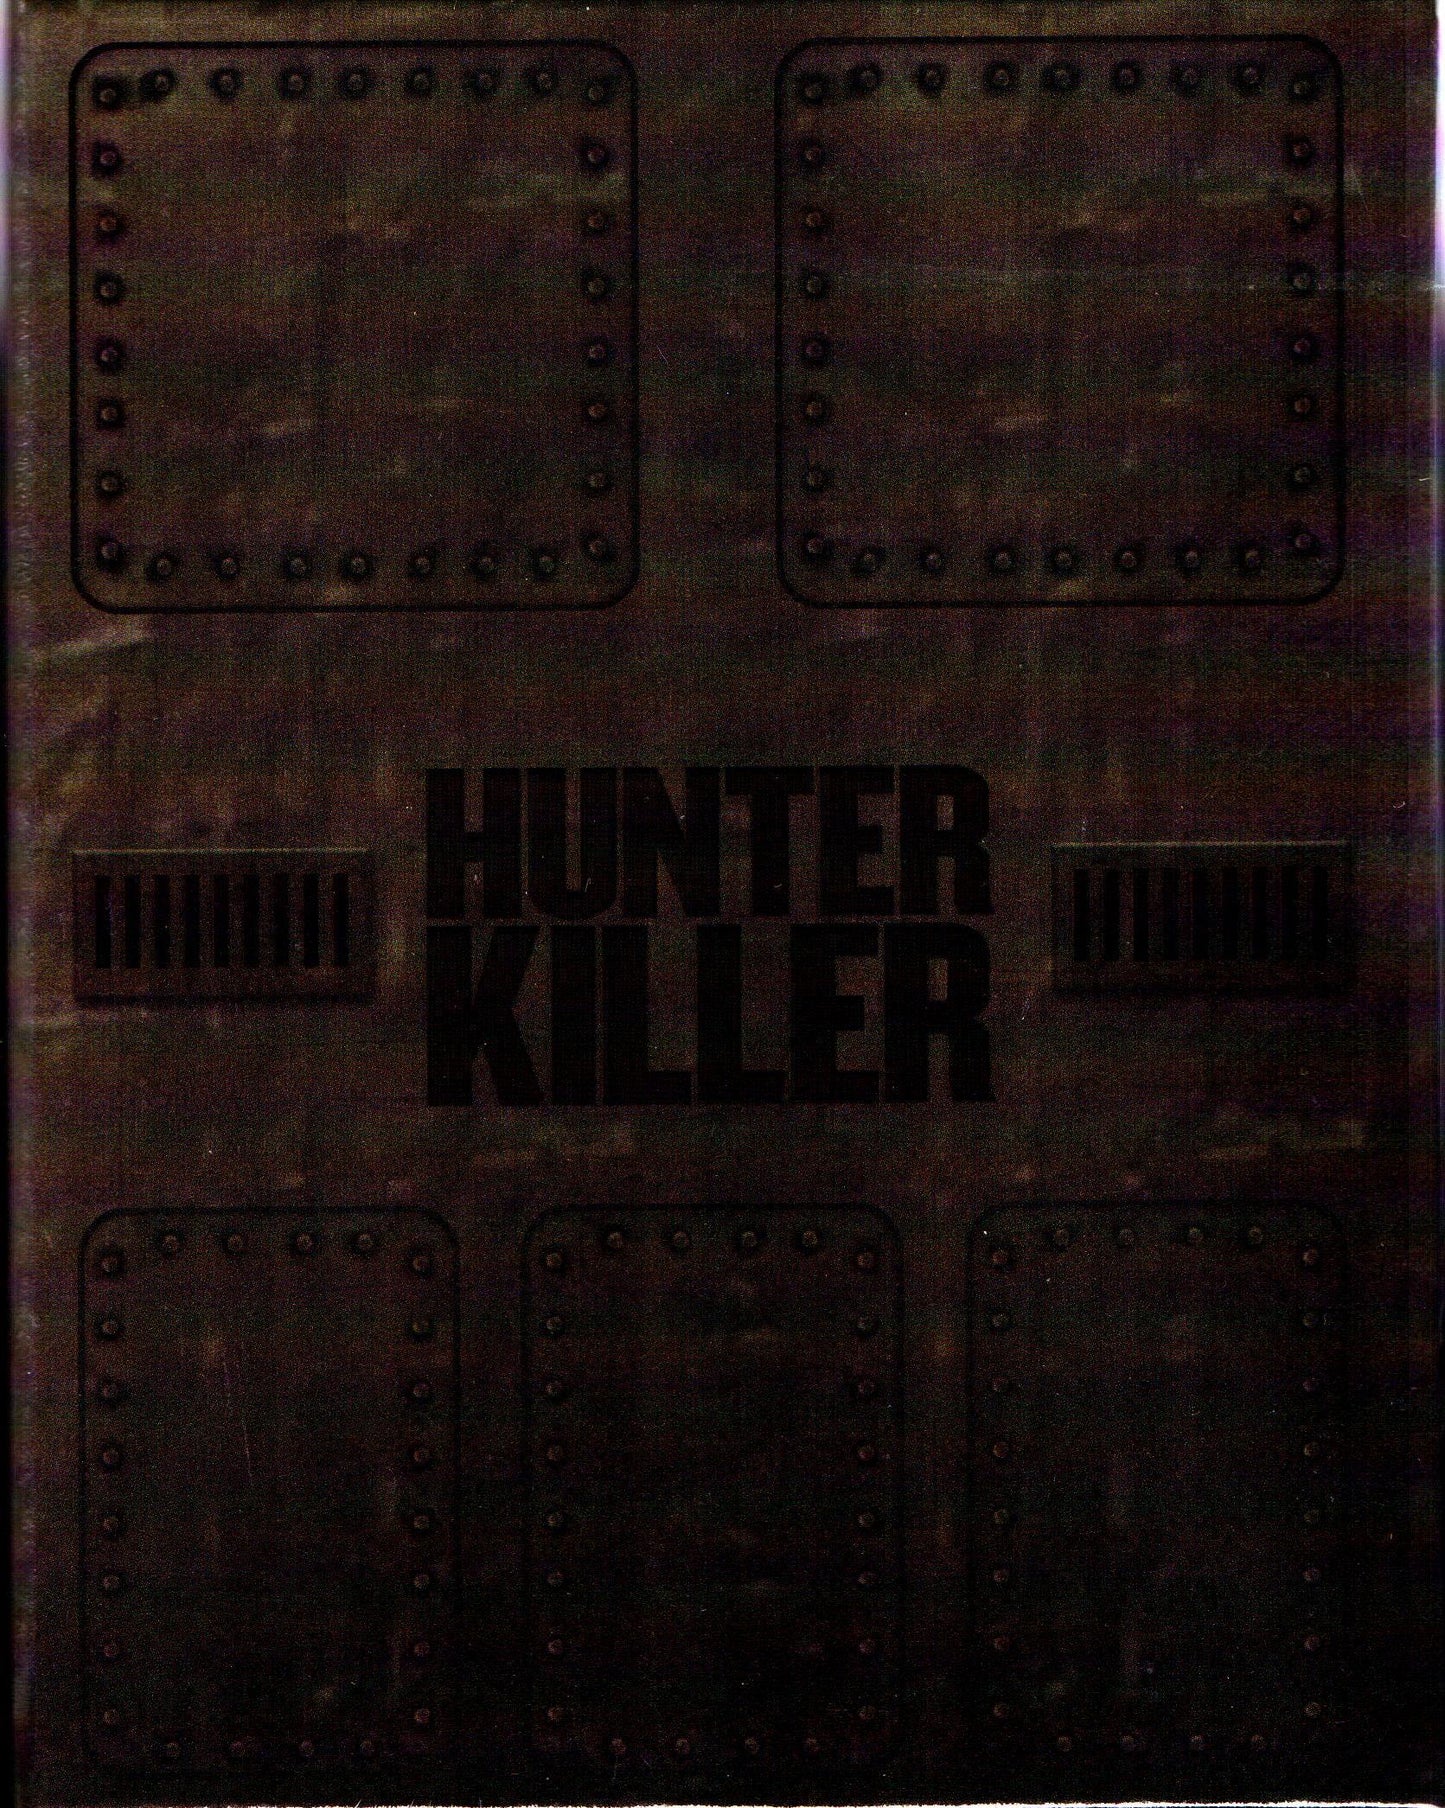 Hunter Killer 4K 1-Click SteelBook (KimchiDVD#76)(EMPTY)(Korea)(Slip Box)